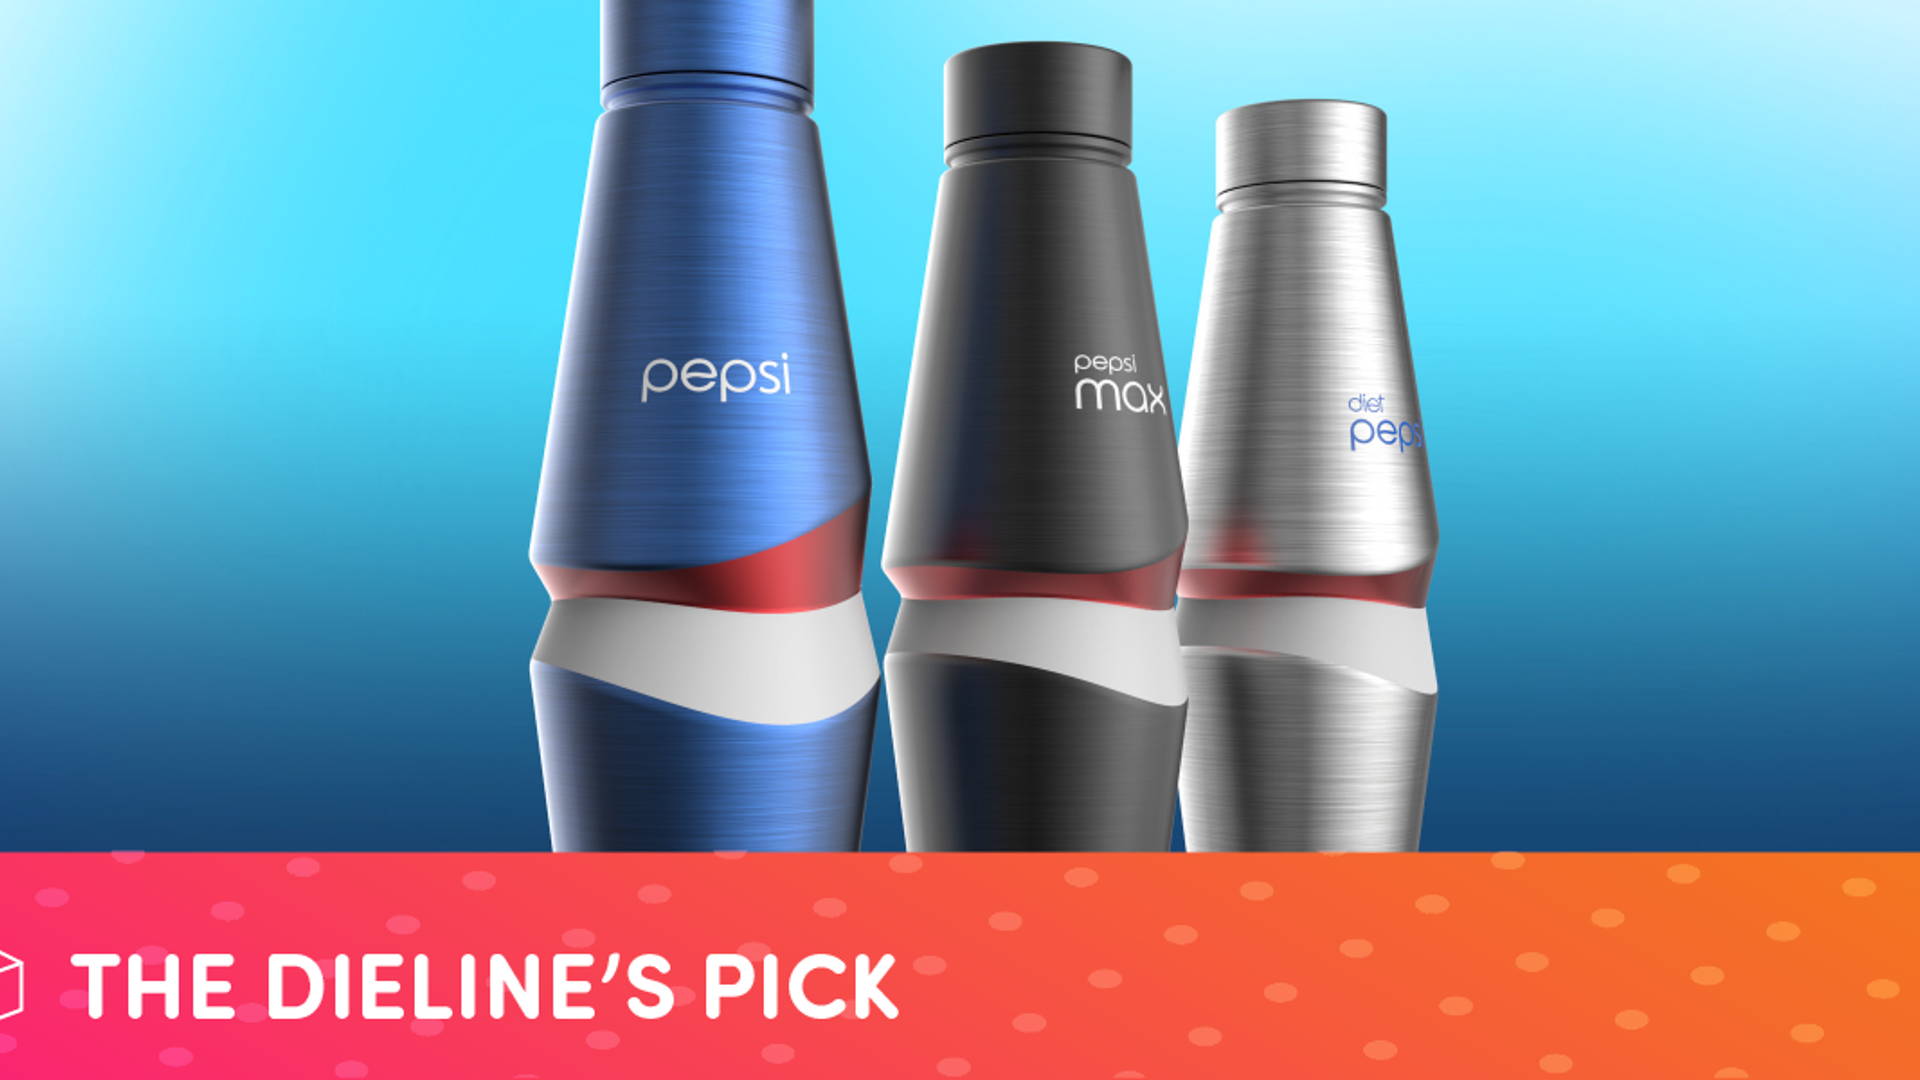 Featured image for 2015 CWWWR AWARD WINNER: Dieline's Pick - Pepsi Bottle Concept